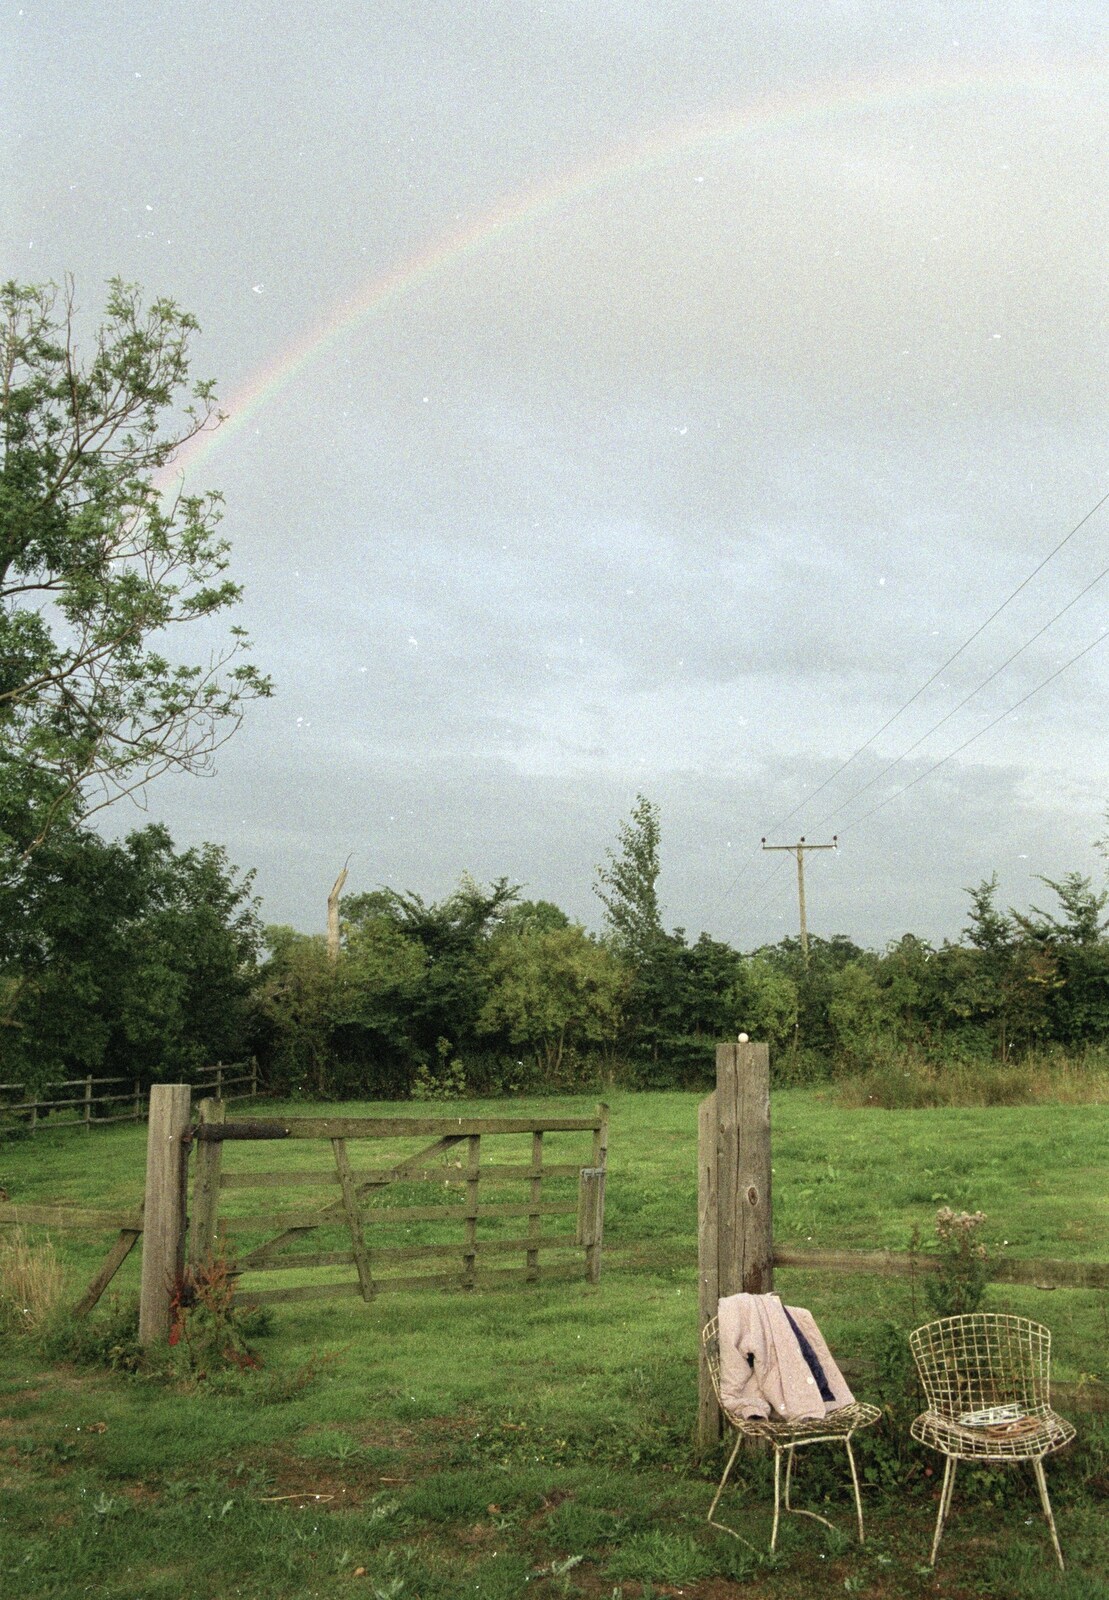 Sue's Fire Dance, Stuston, Suffolk - 21st July 1990: A dim rainbow appears